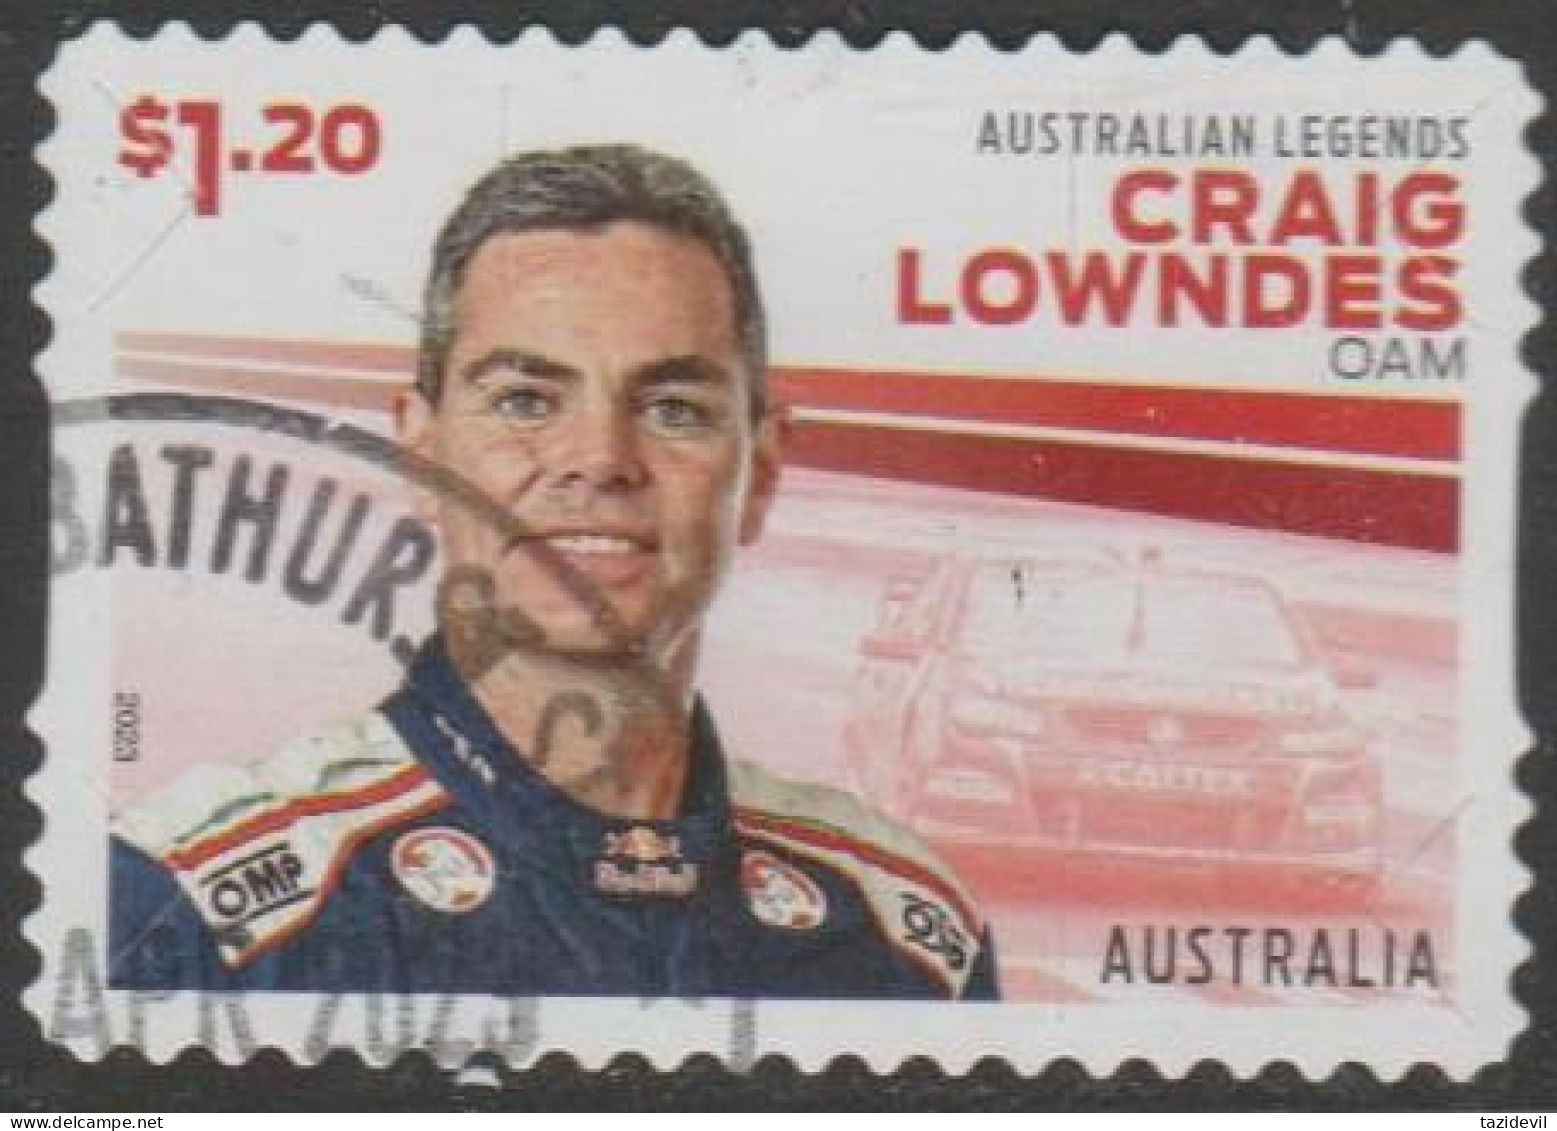 AUSTRALIA - DIE-CUT-USED 2023 $1.20 Legends Of Motor Sport - Craig Lowdens OAM - Oblitérés